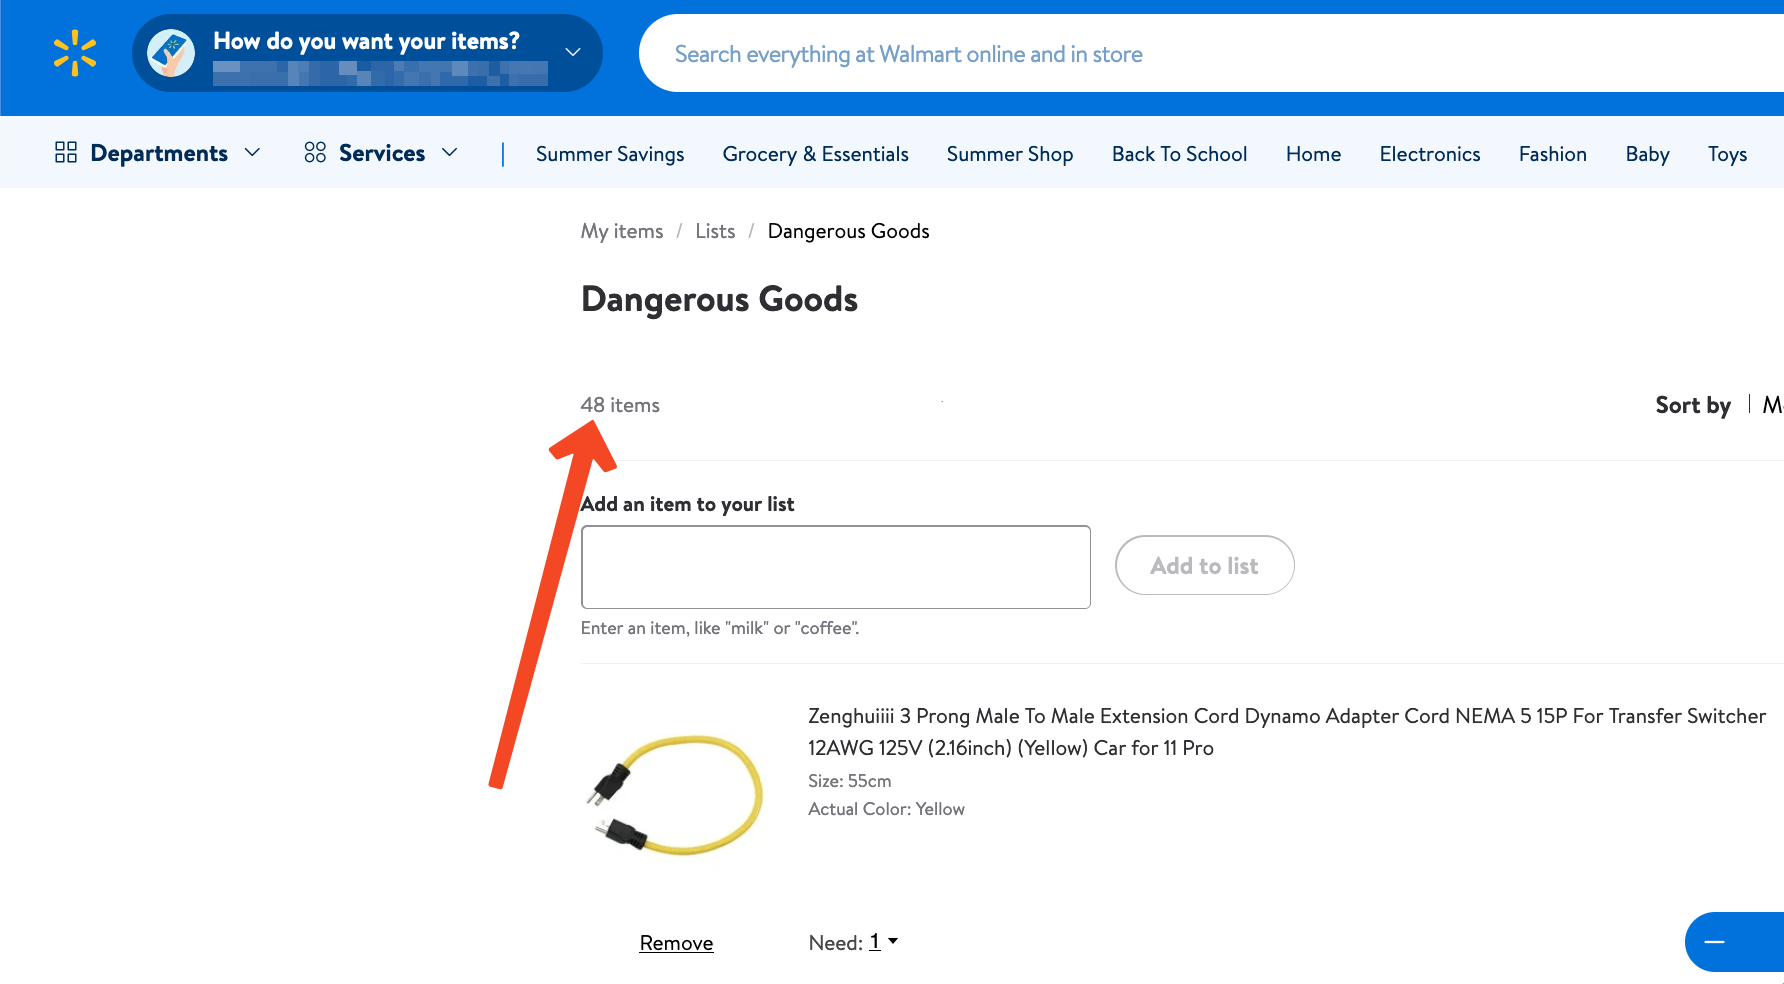 screenshot of walmart item list titled "Dangerous Goods", orange arrow pointing to "48 items"